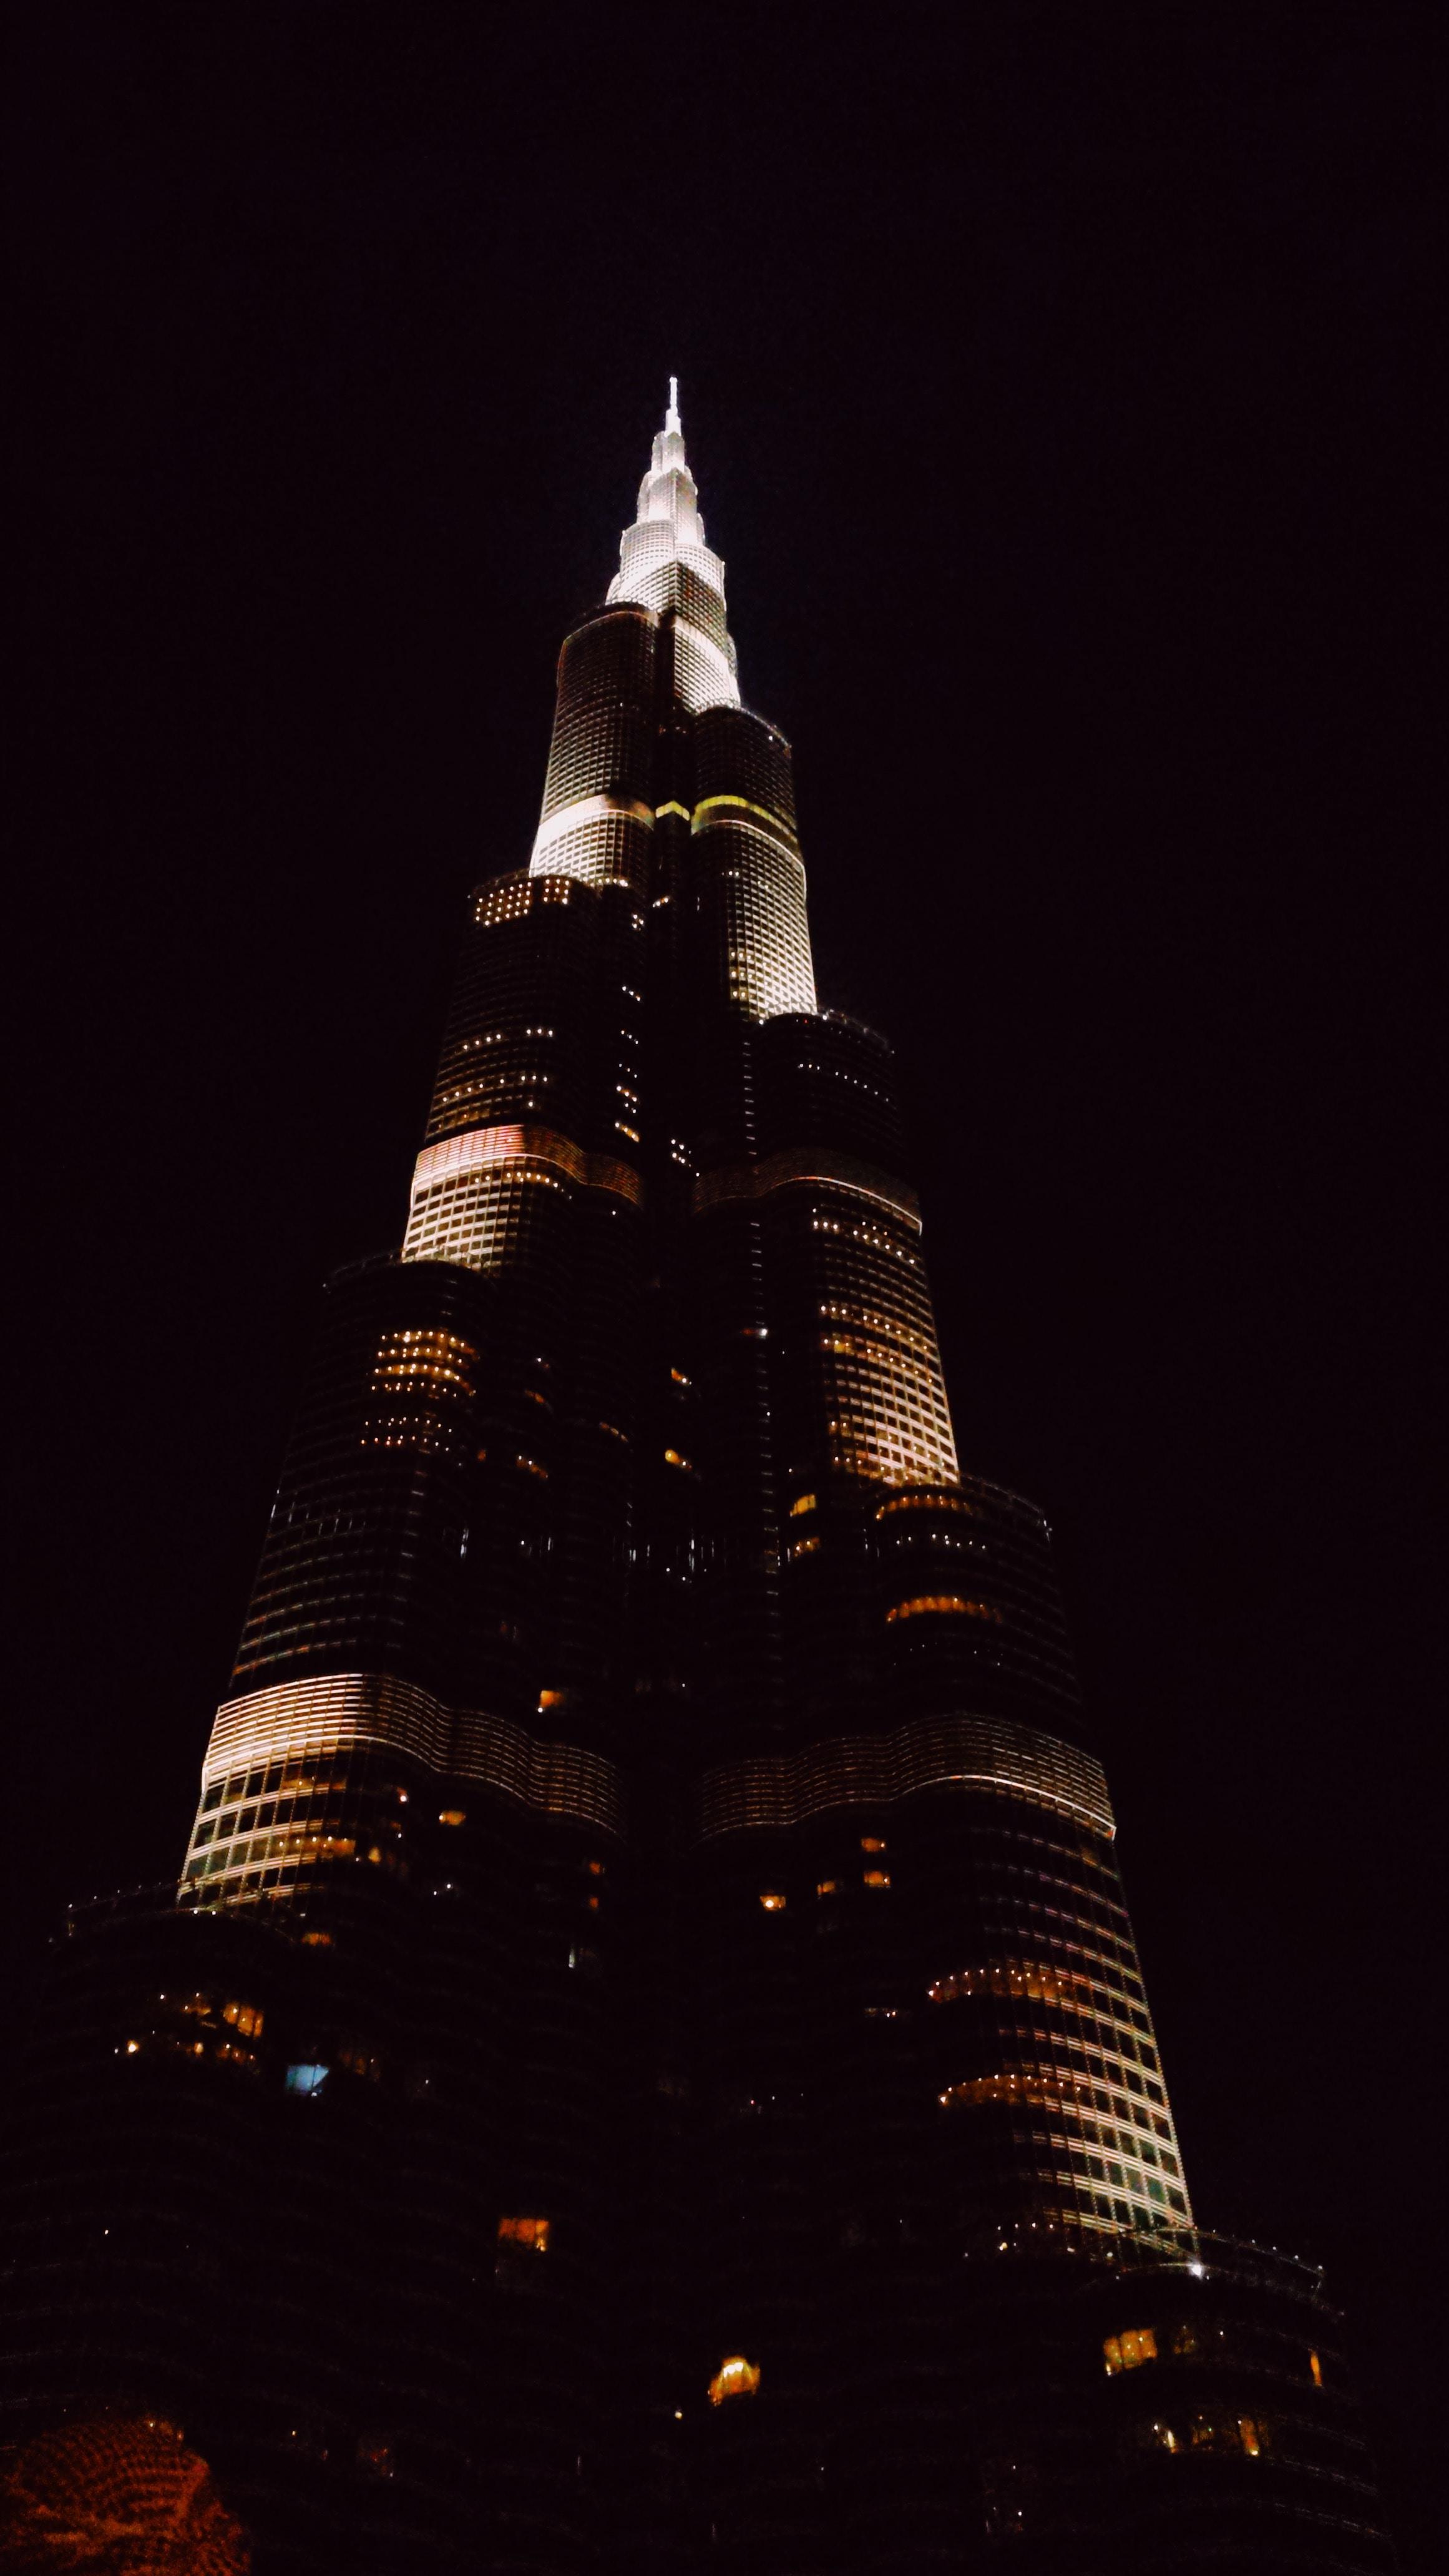 Burj Khalifa Picture. Download Free Image